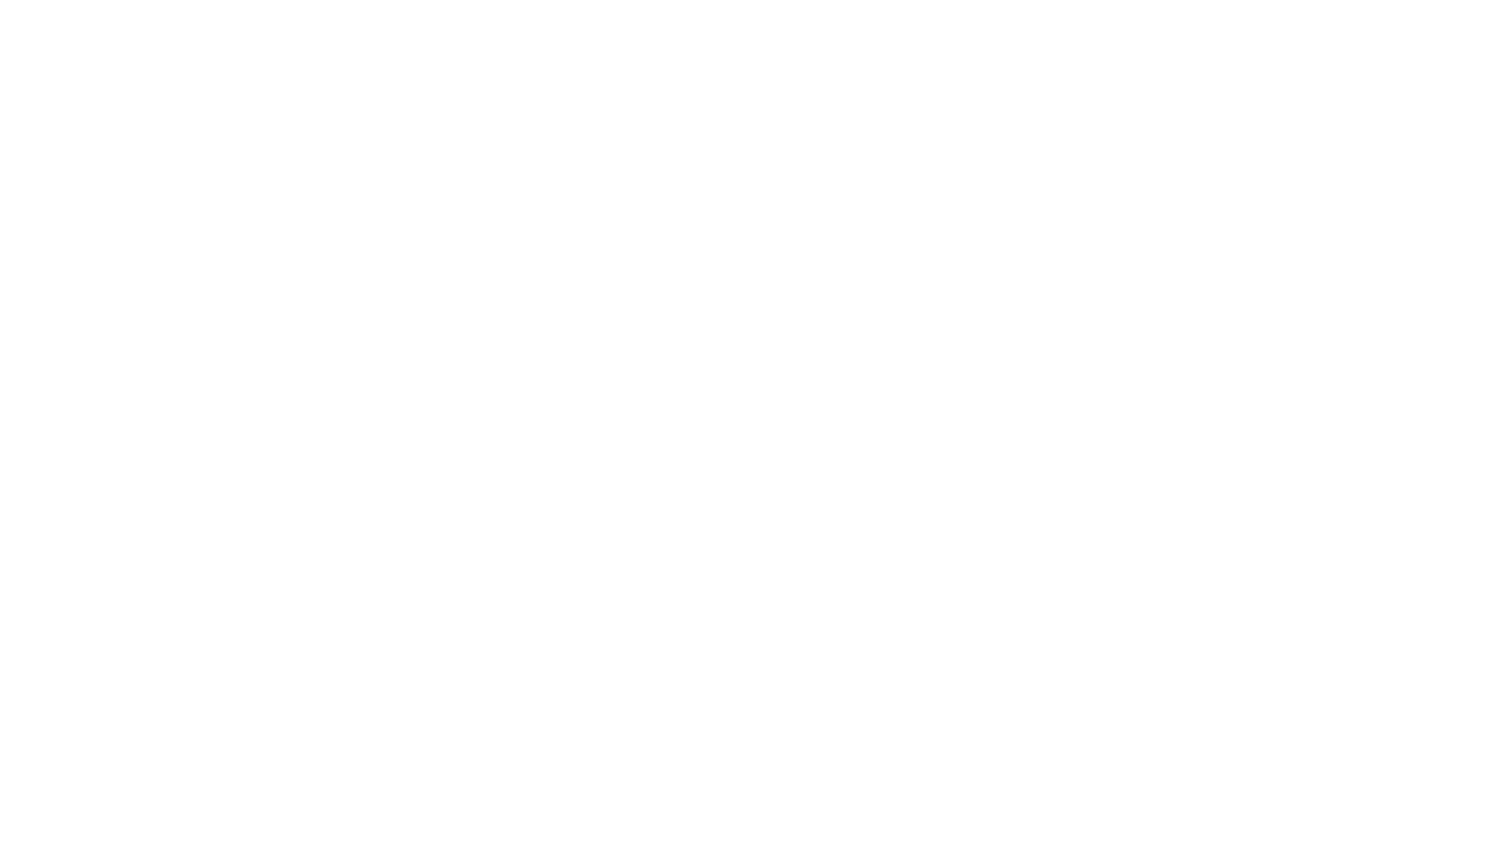 Leo Palma, commercial photographer